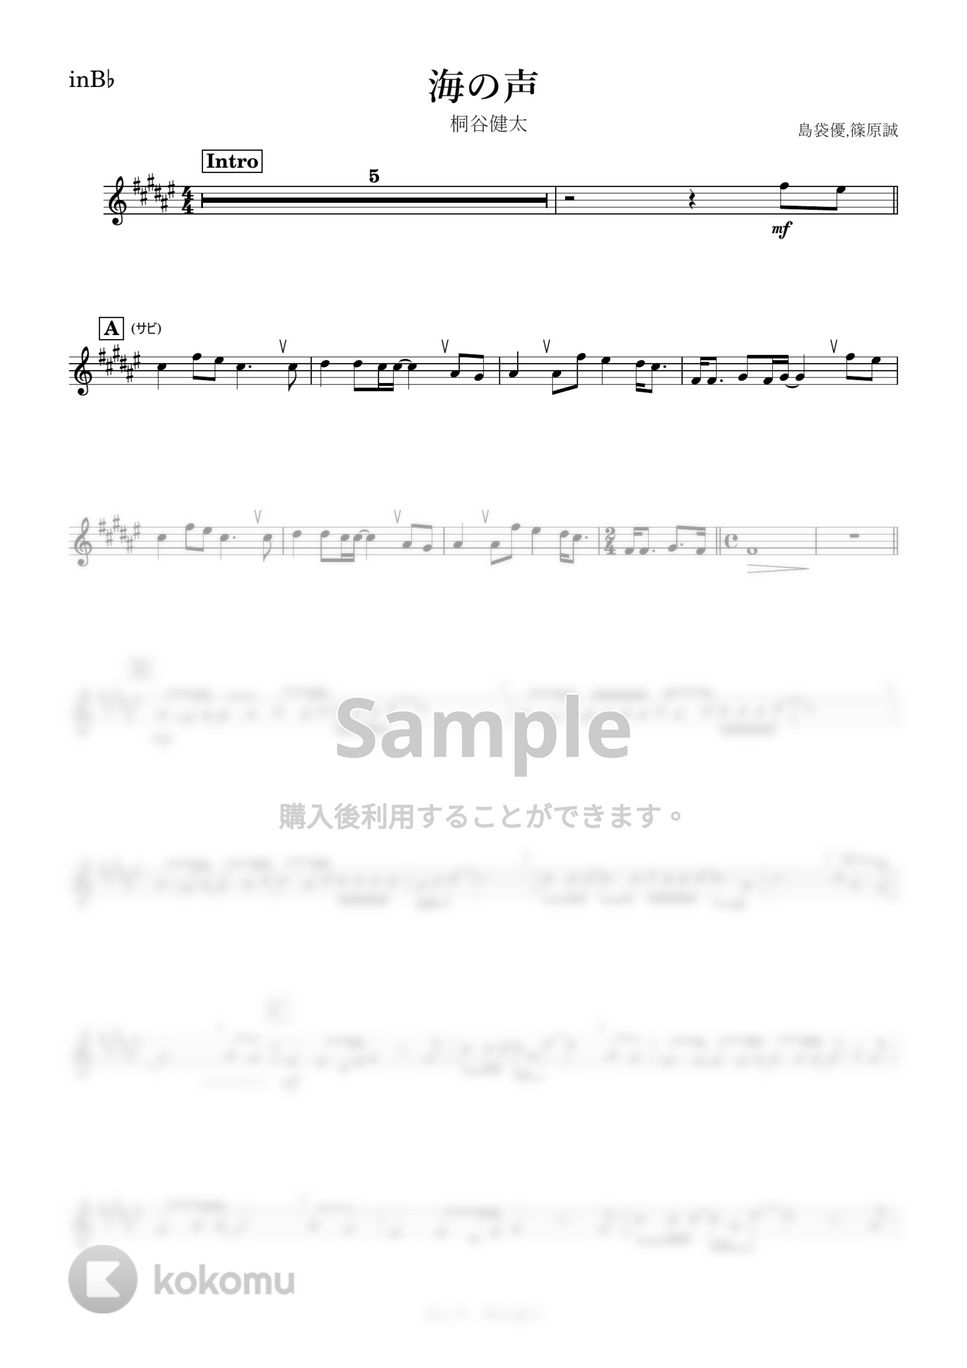 桐谷健太 - 海の声 (B♭) by kanamusic